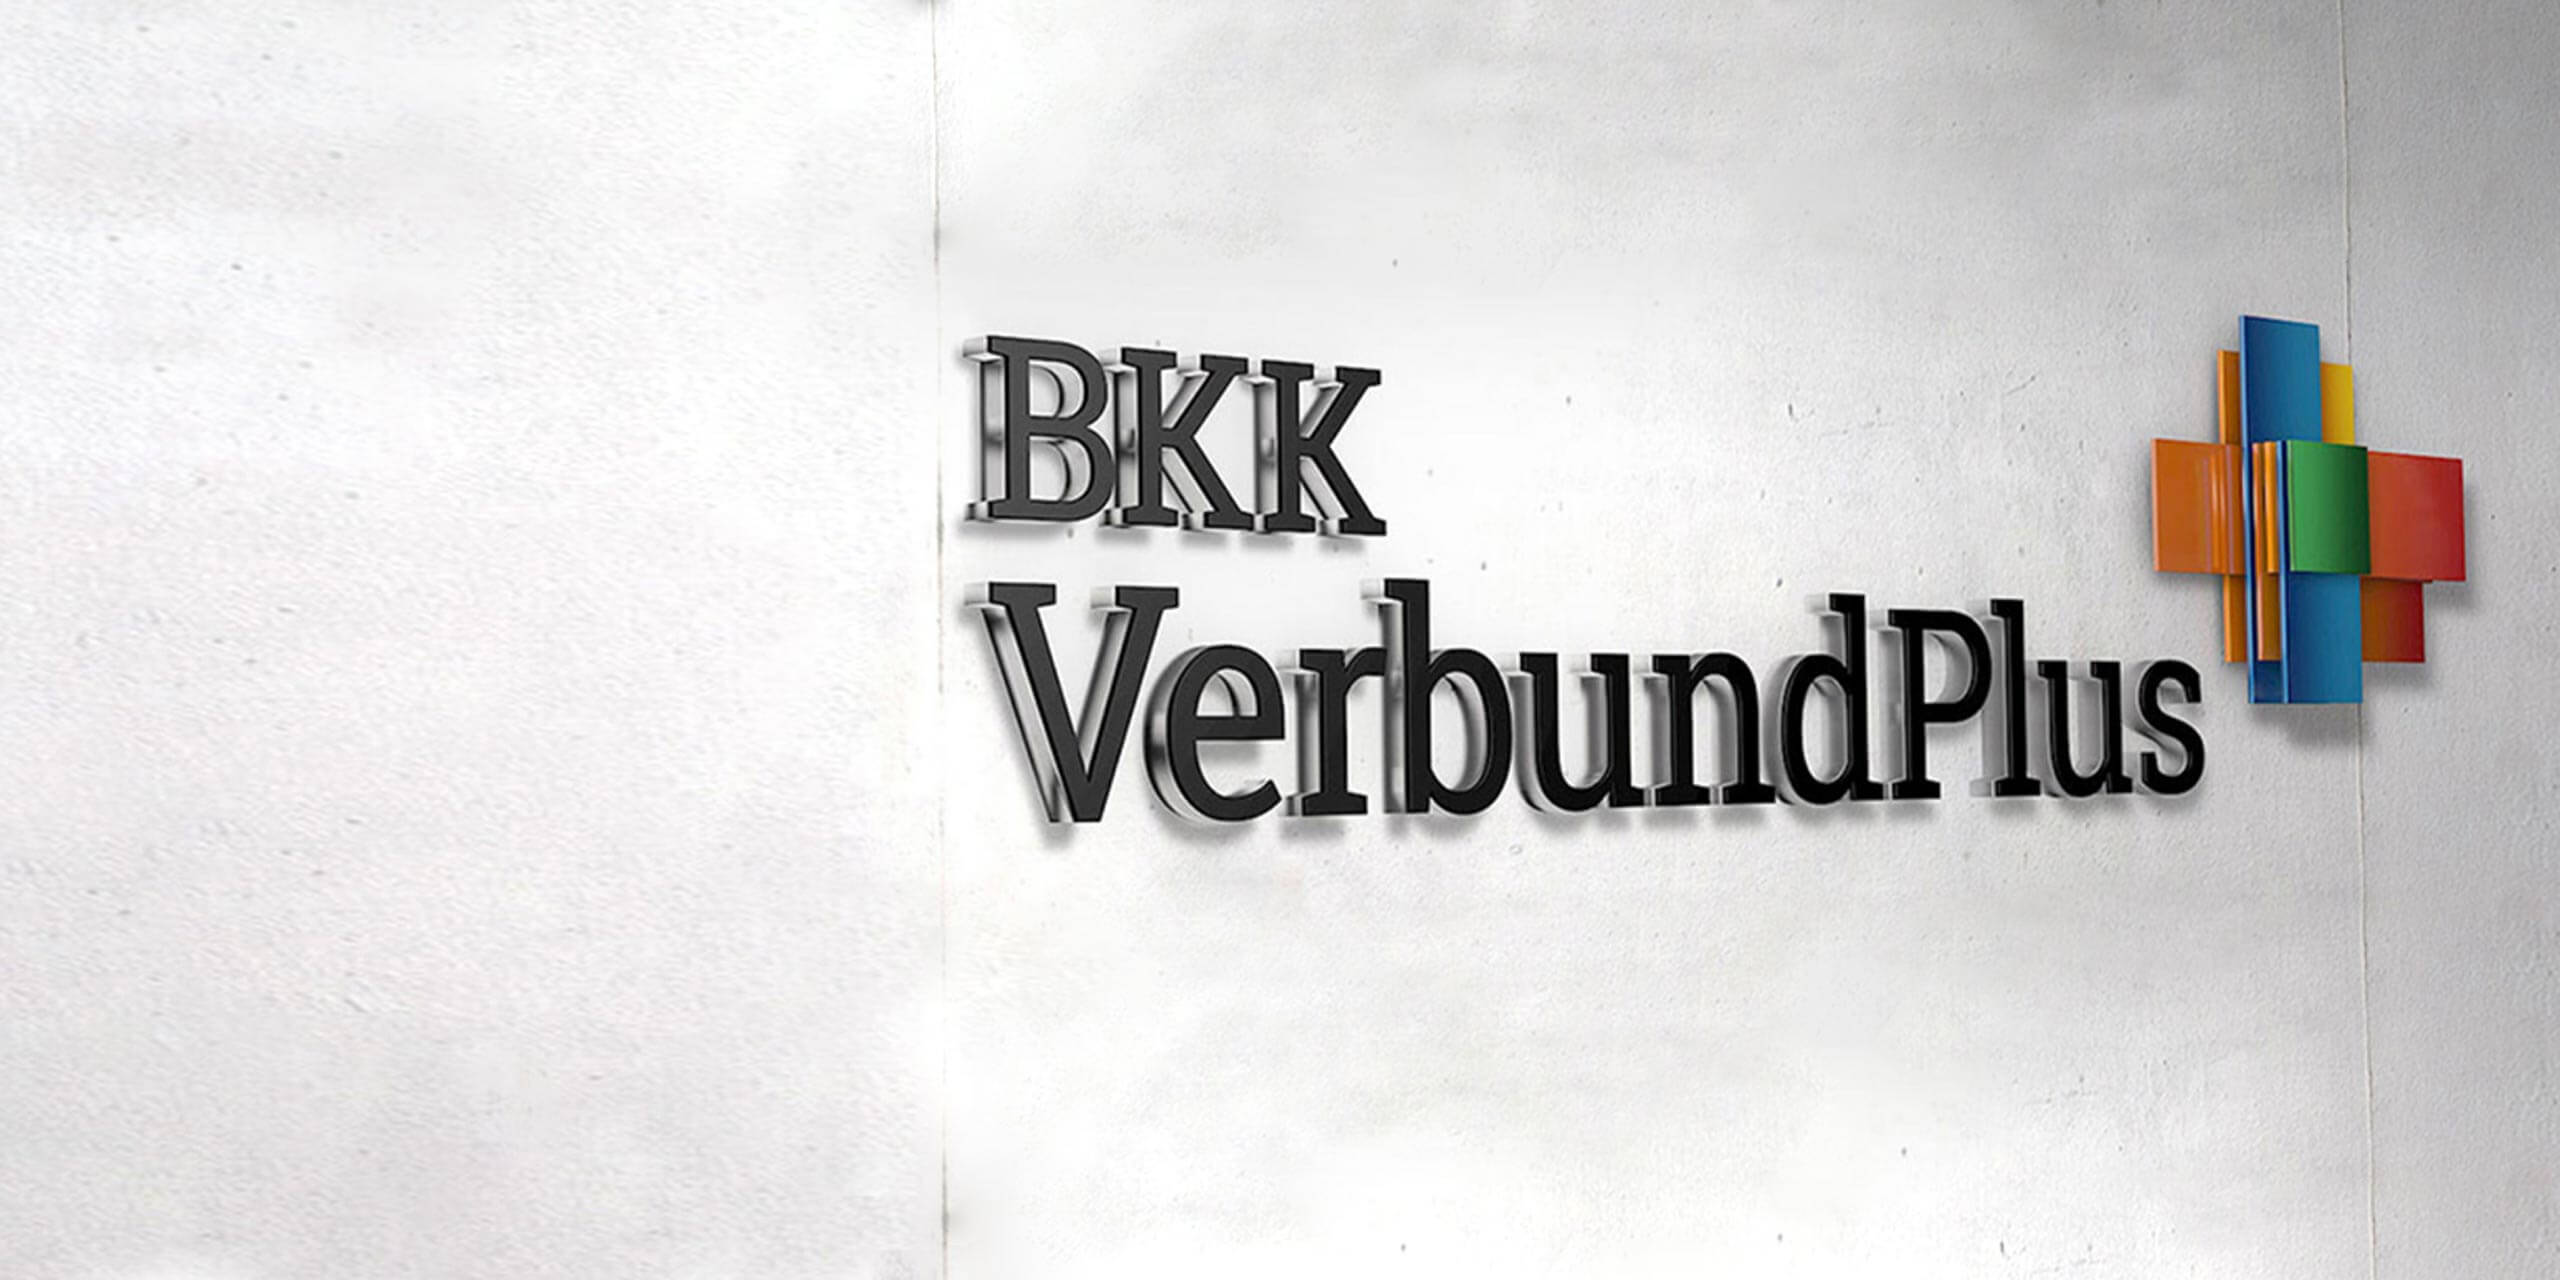 BKK VerbundPlus Logowall